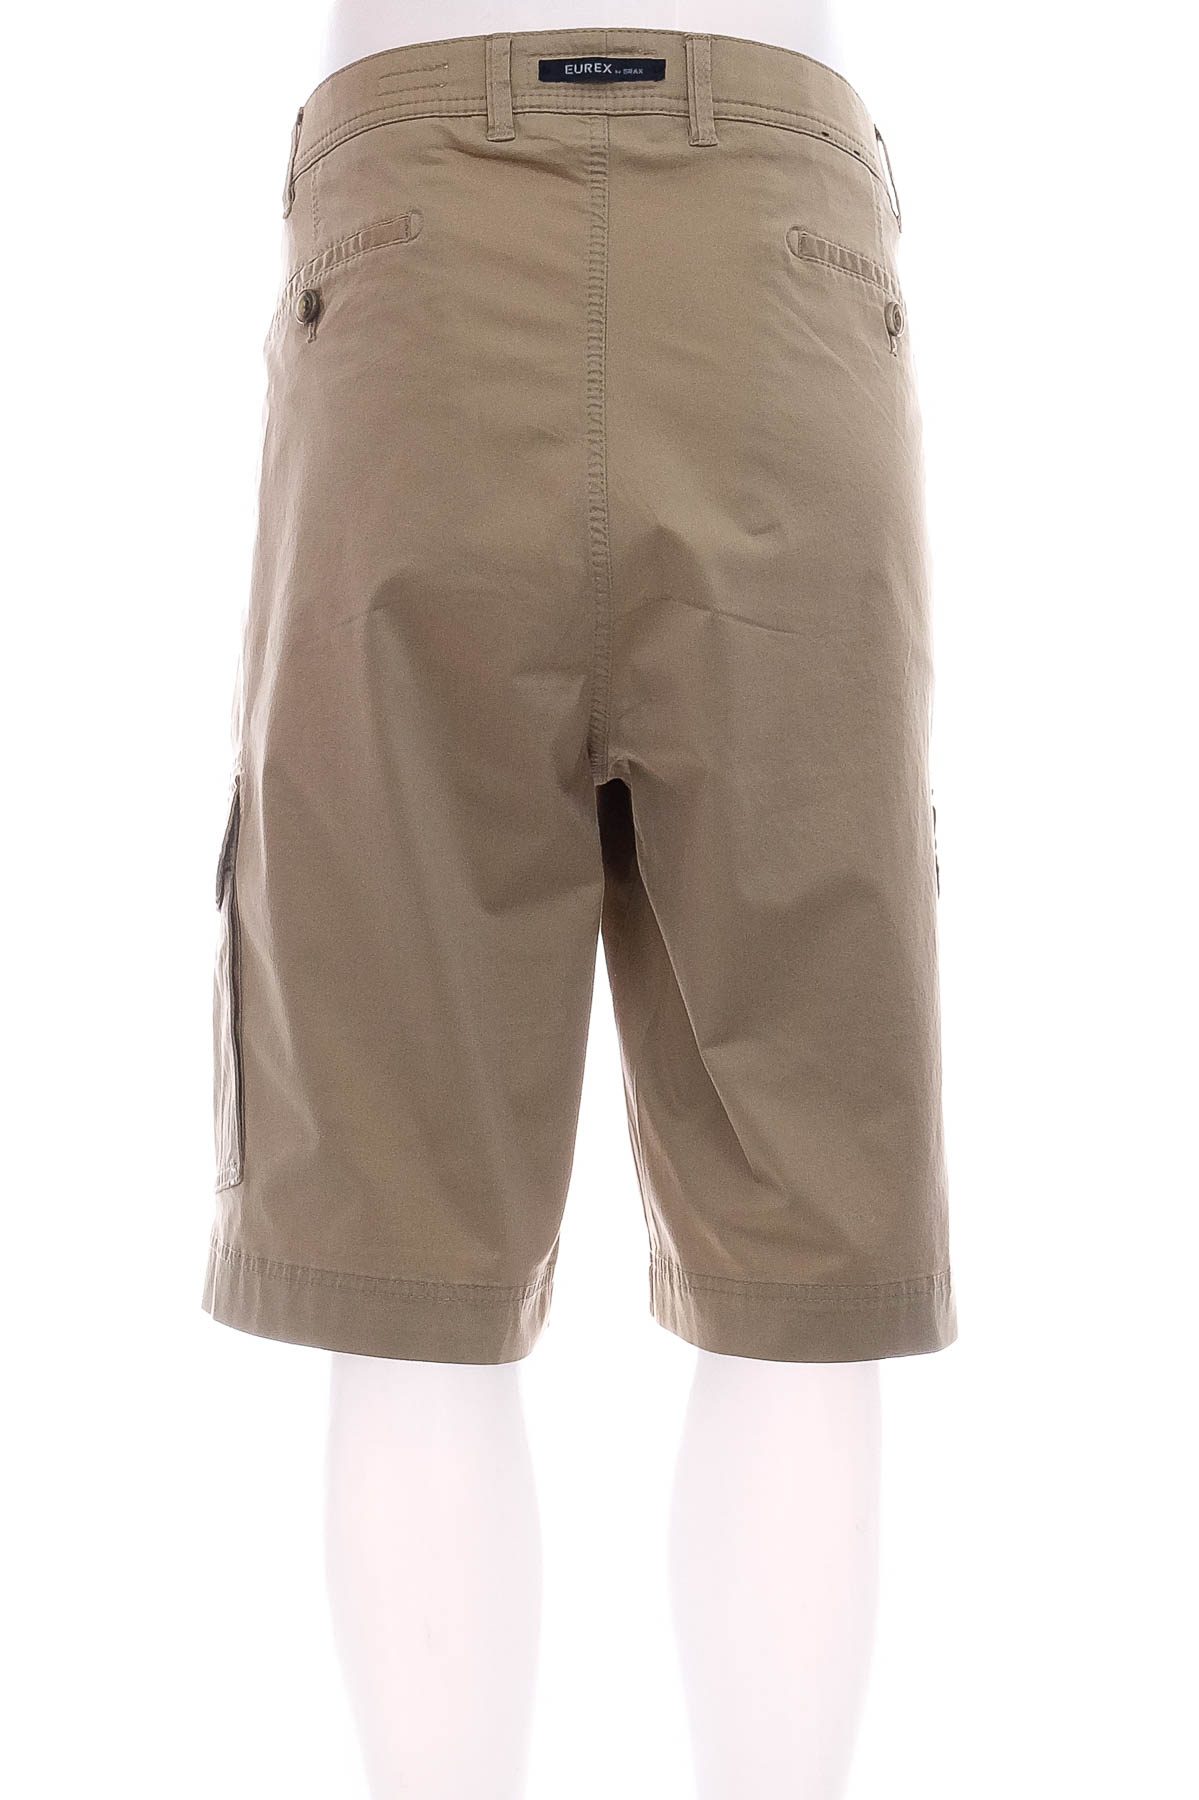 Men's shorts - EUREX BY BRAX - 1